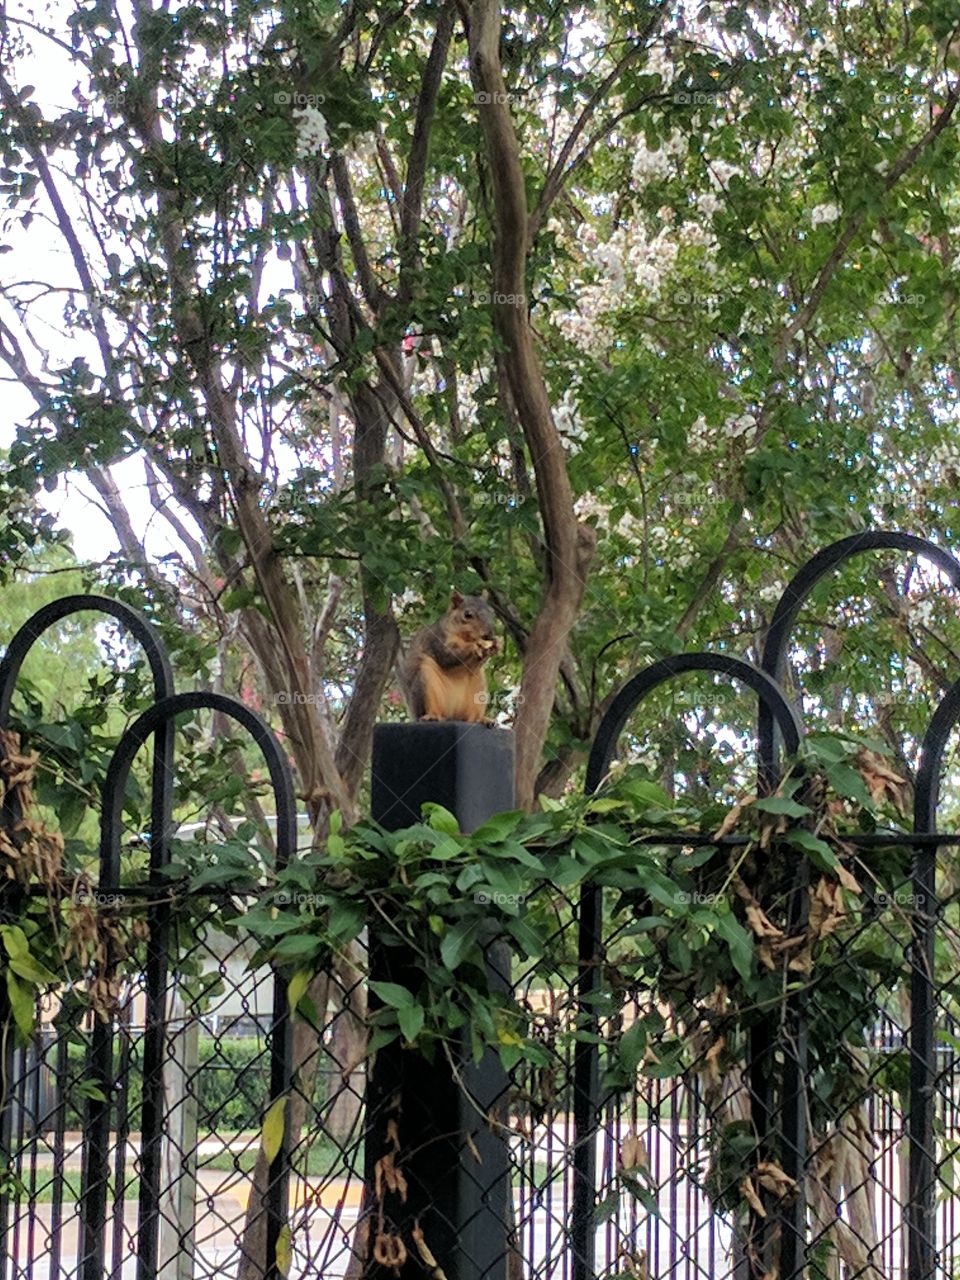 squirrel having lunch